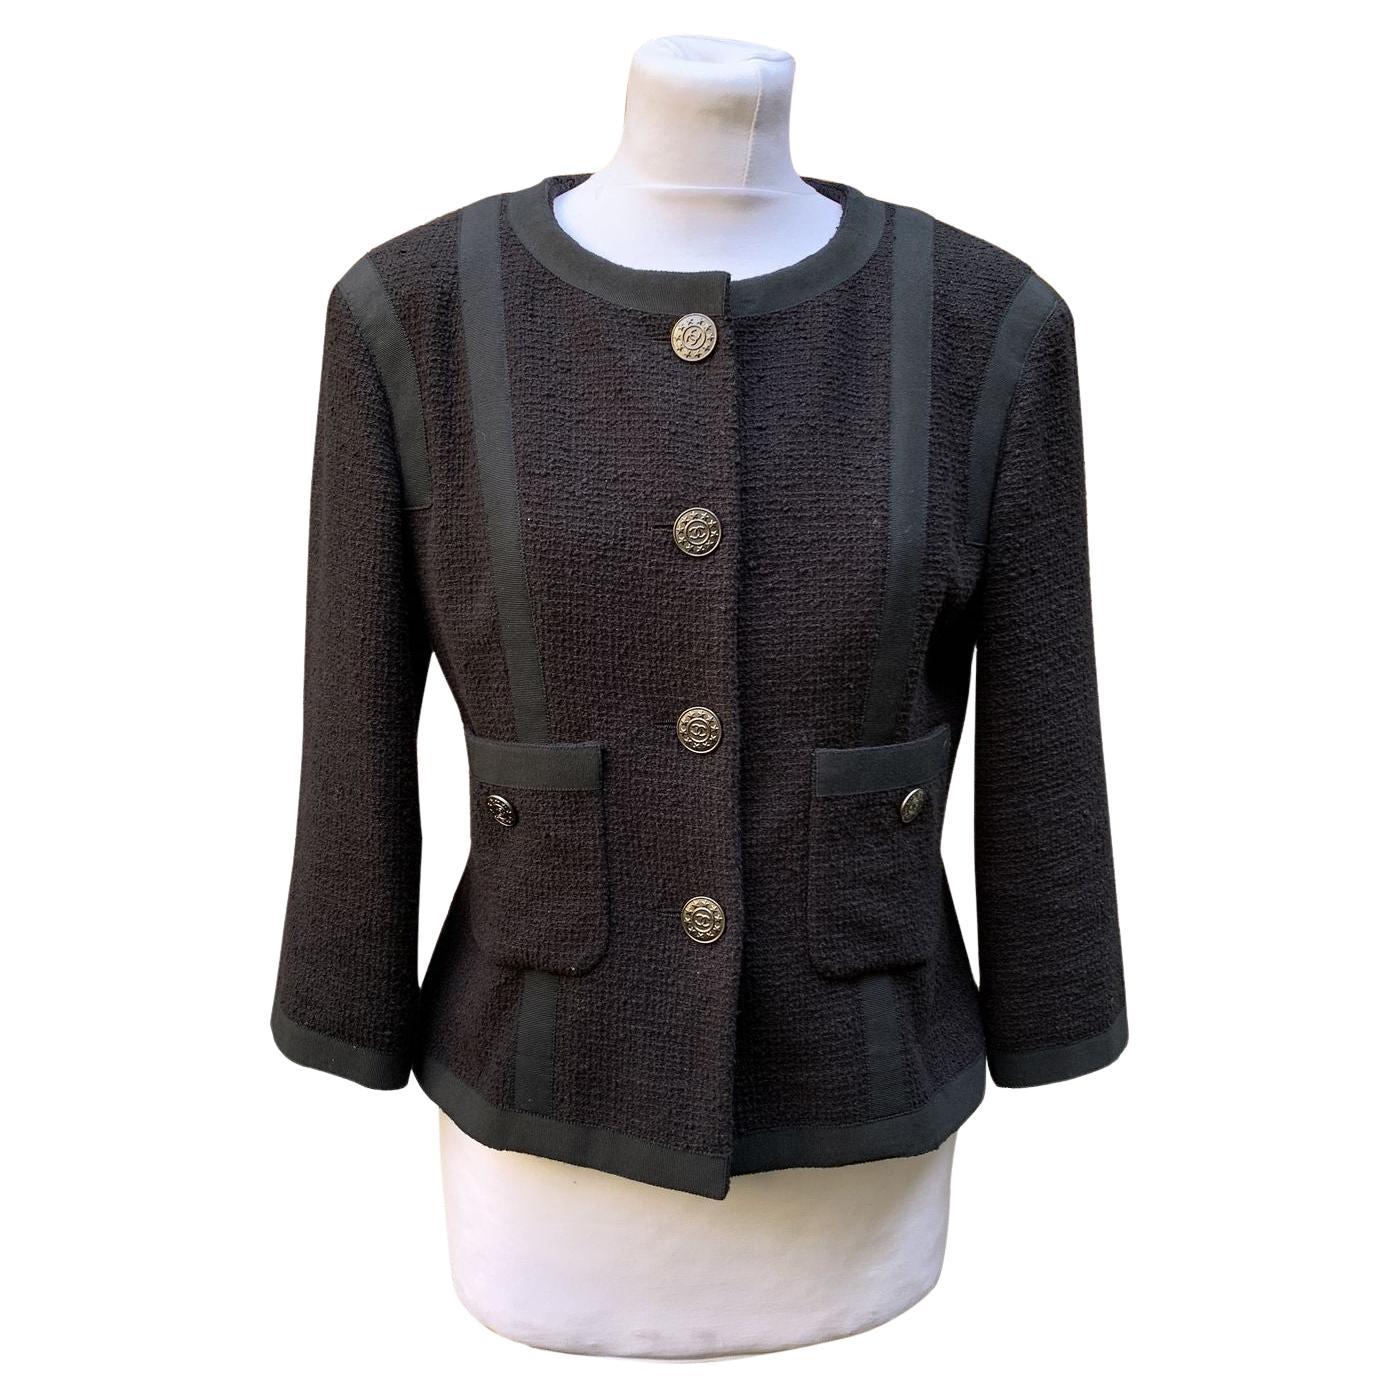 Chanel 2013 Black Cotton Tweed 3/4 Length Jacket Size 36 FR